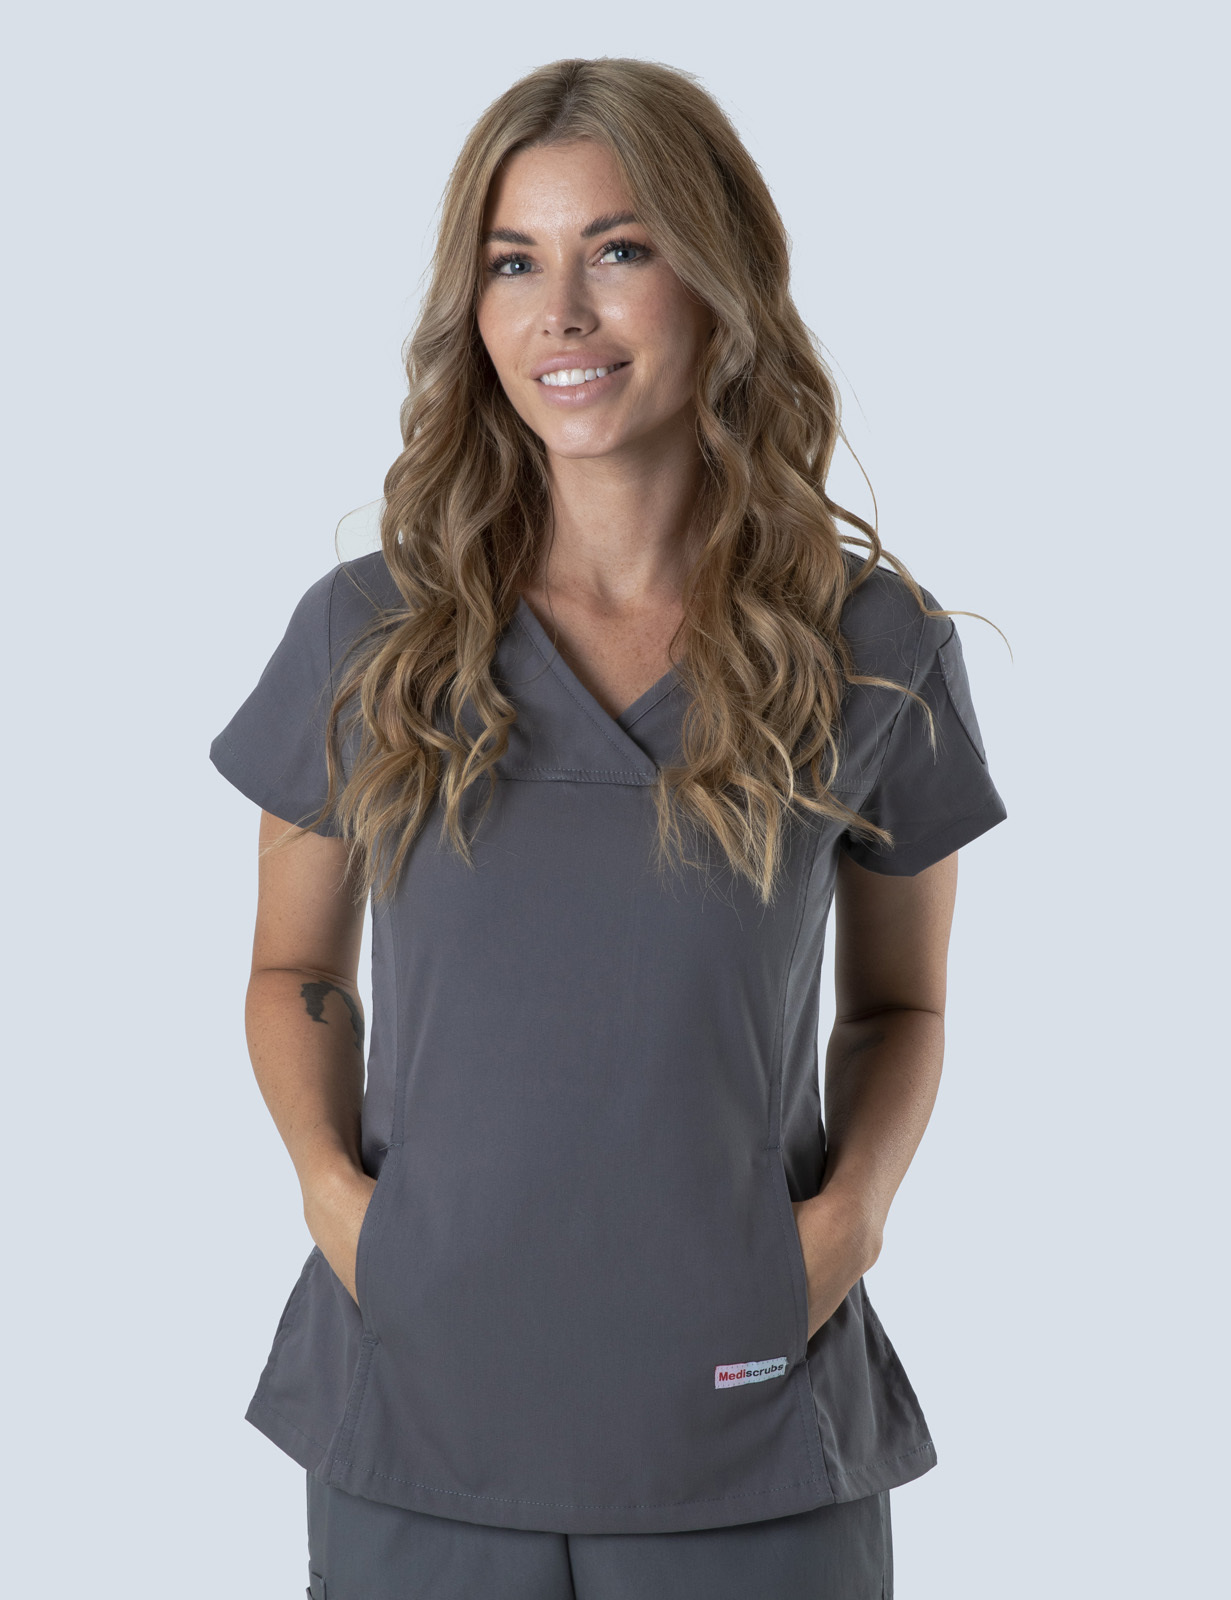 Queensland Children's Hospital Emergency Department Nurse Unit Manager Uniform Top Bundle  (Women's Fit Top in Steel Grey incl Logos)